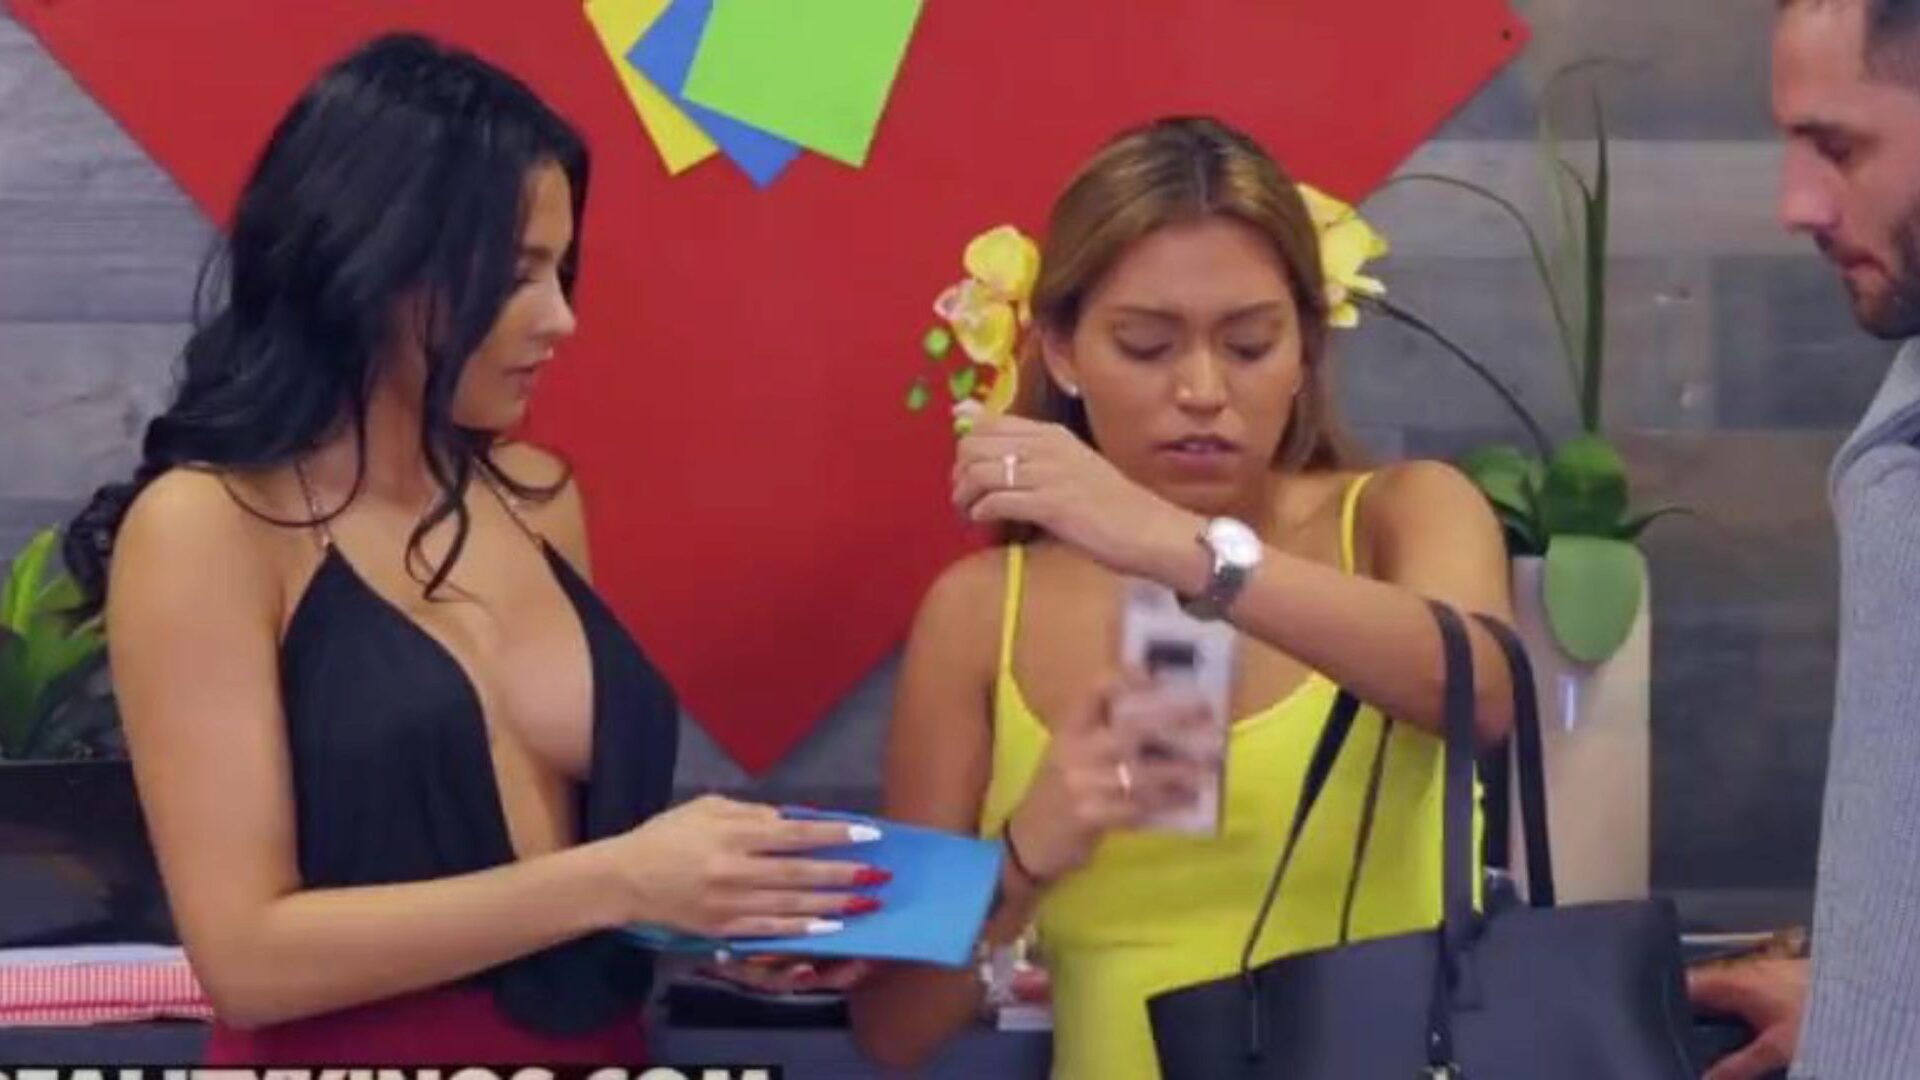 Sneaky Sex, big breast lalin girl Serena Santos makes studs cheat - Reality Kings